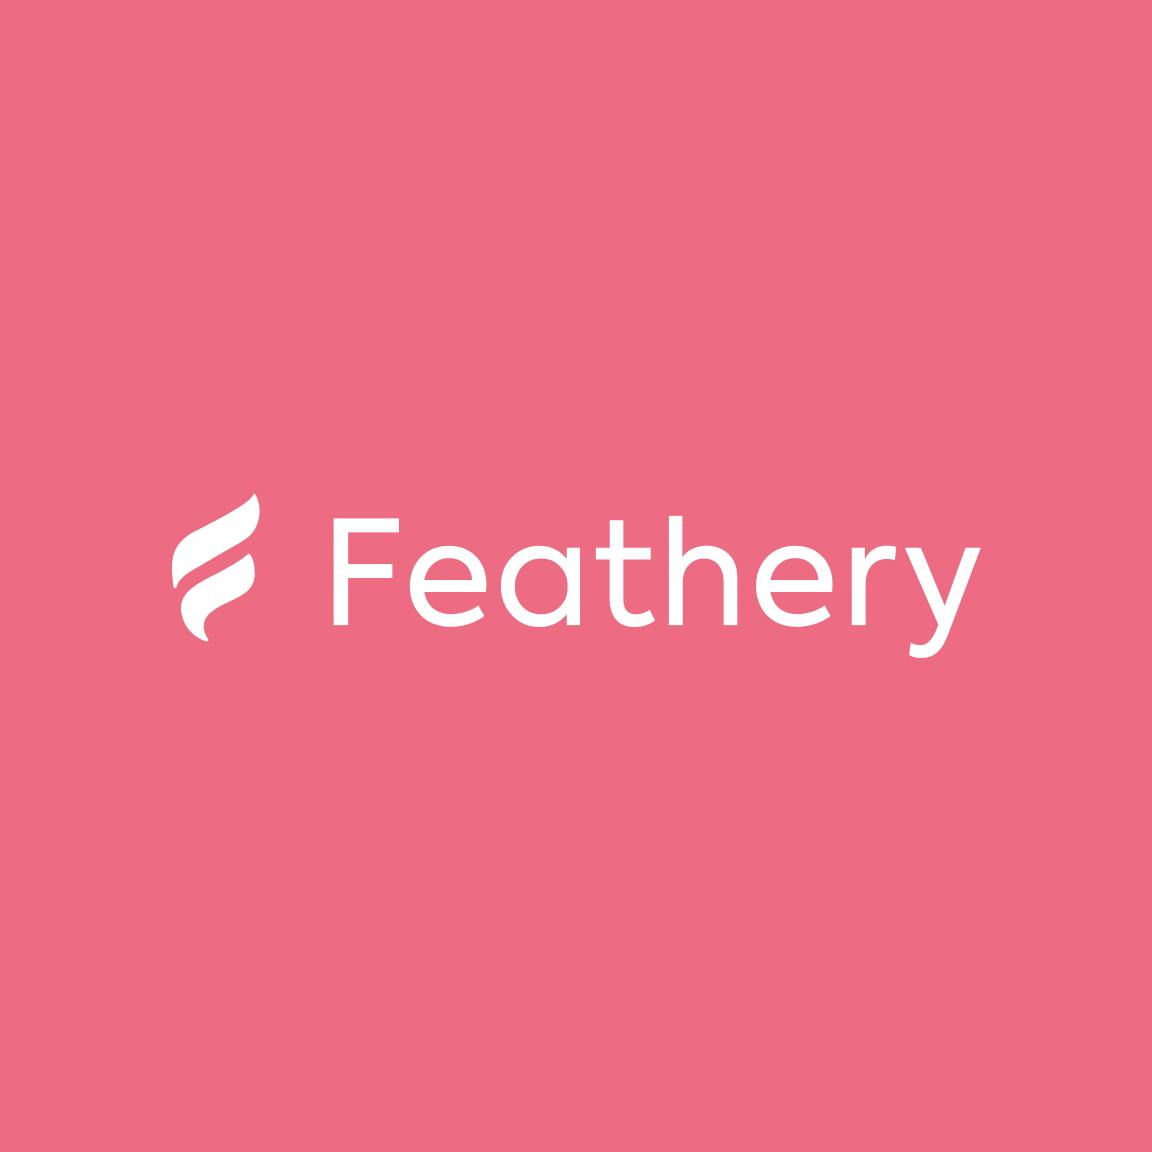 Feathery logo